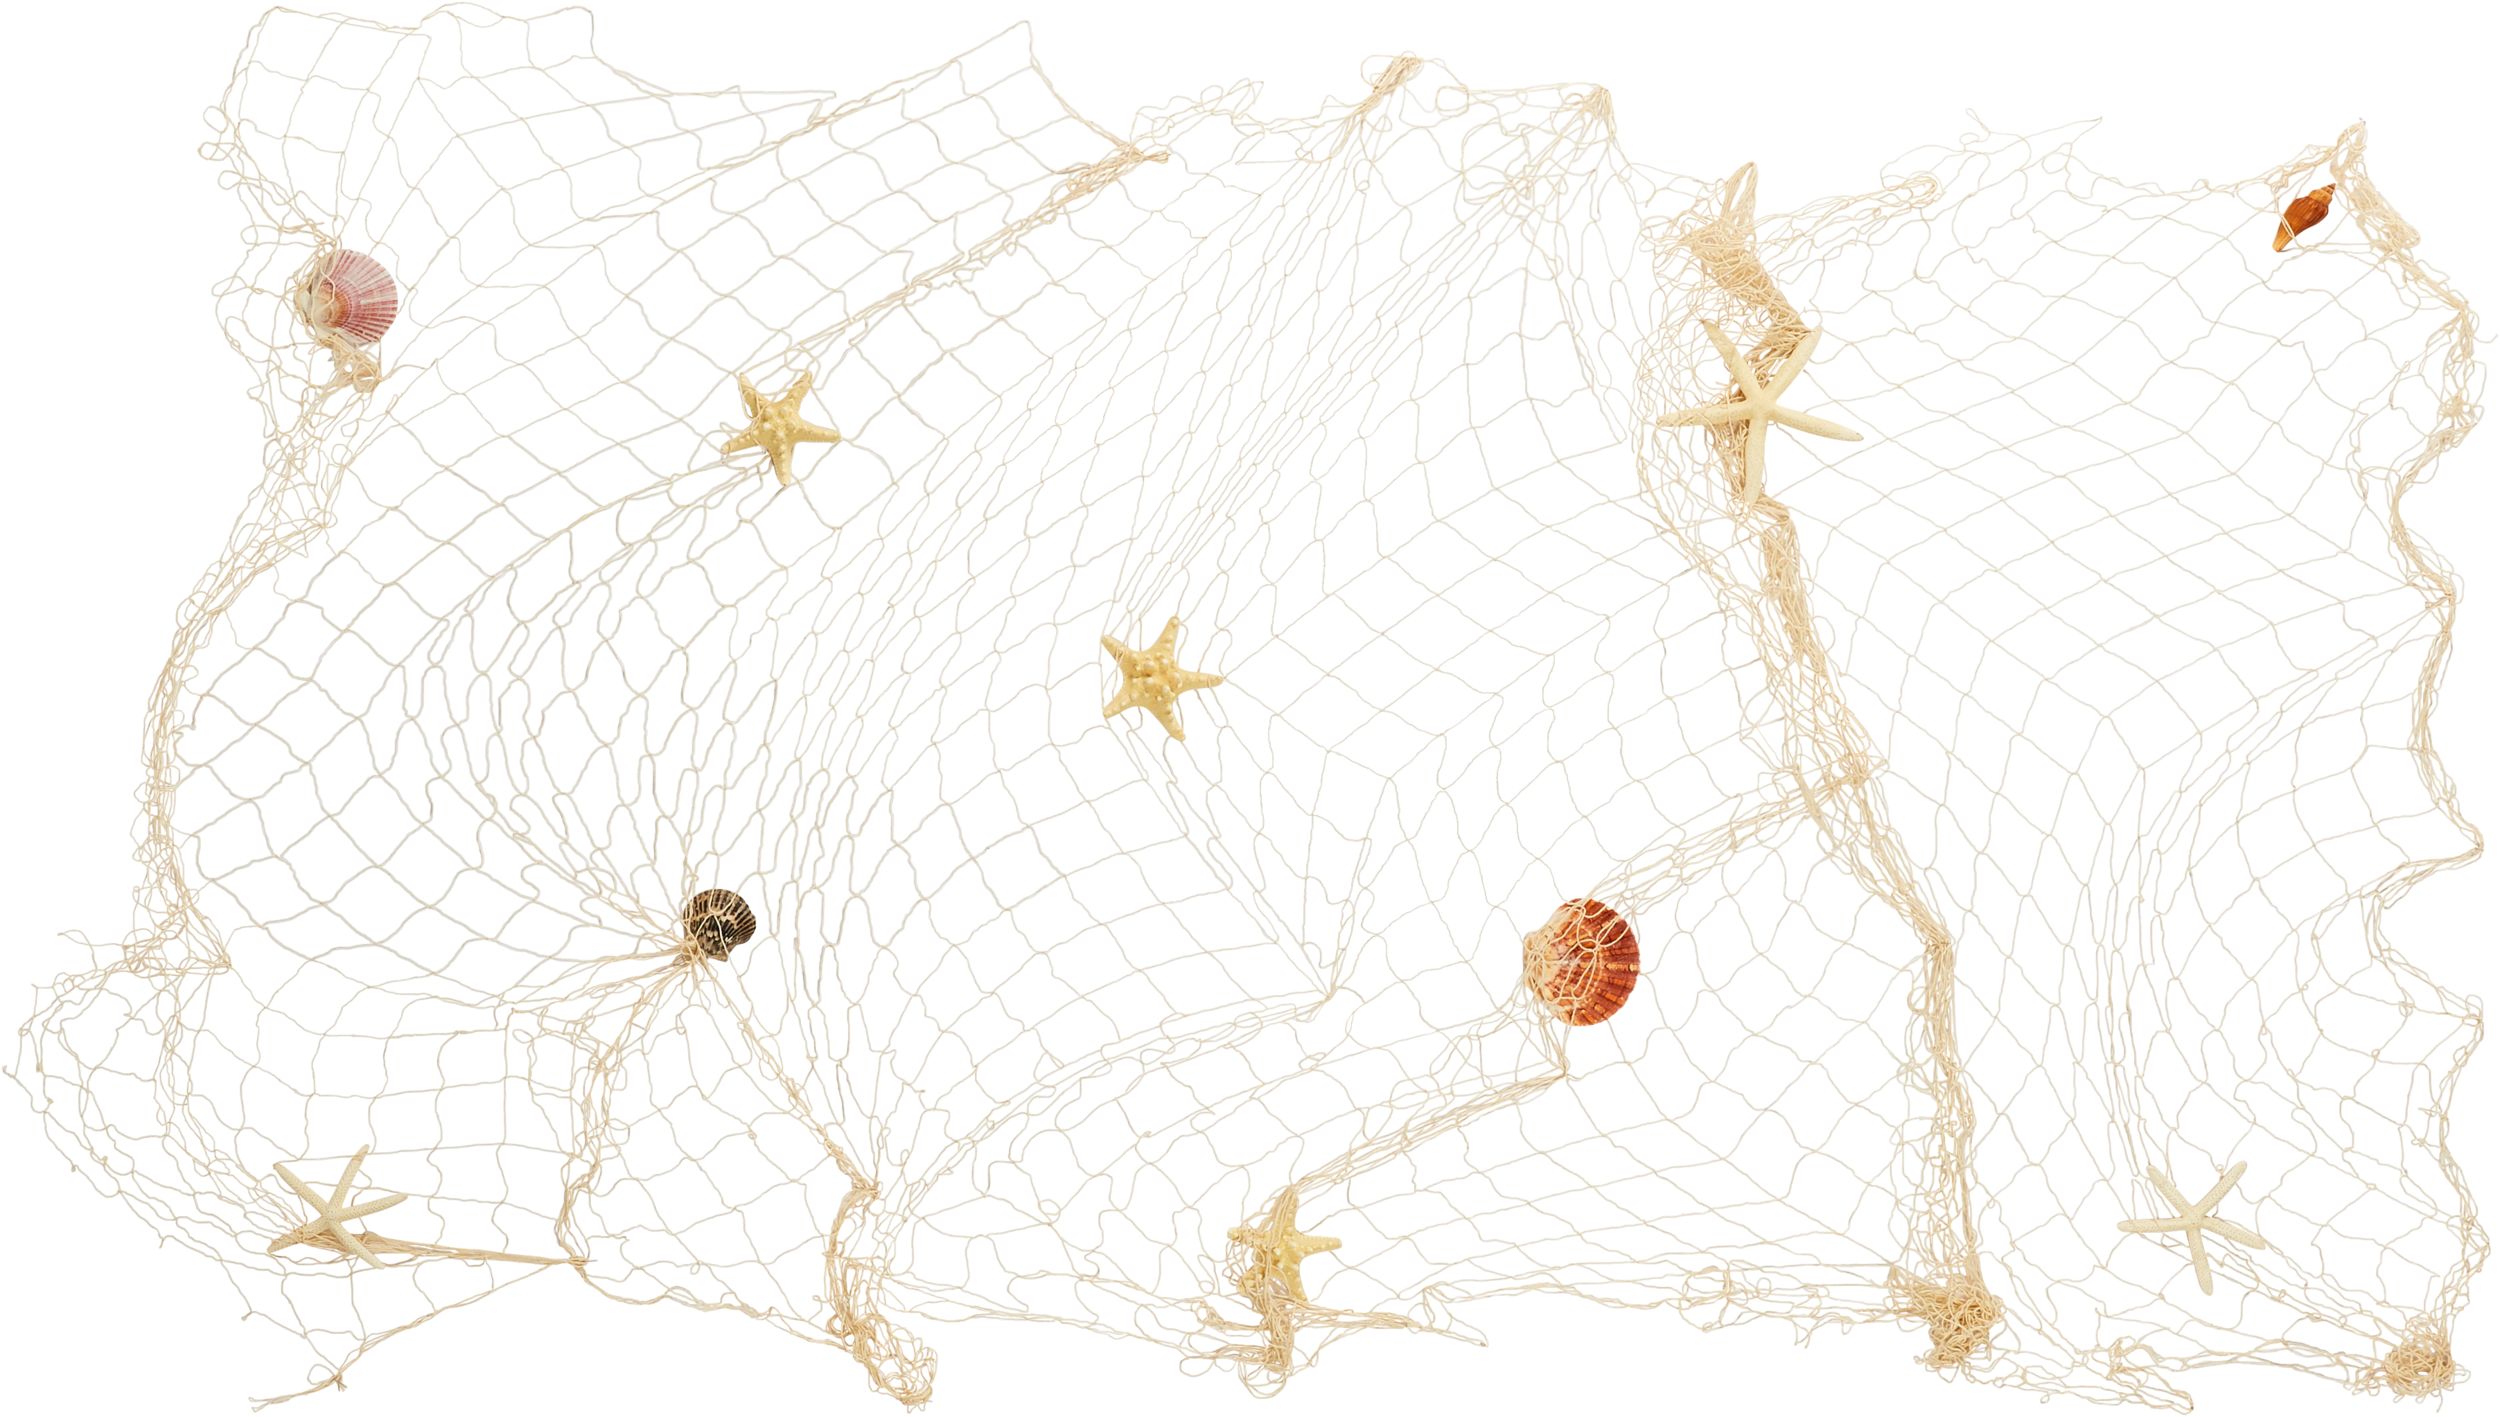 Amscan Decorative Fish Net - Natural